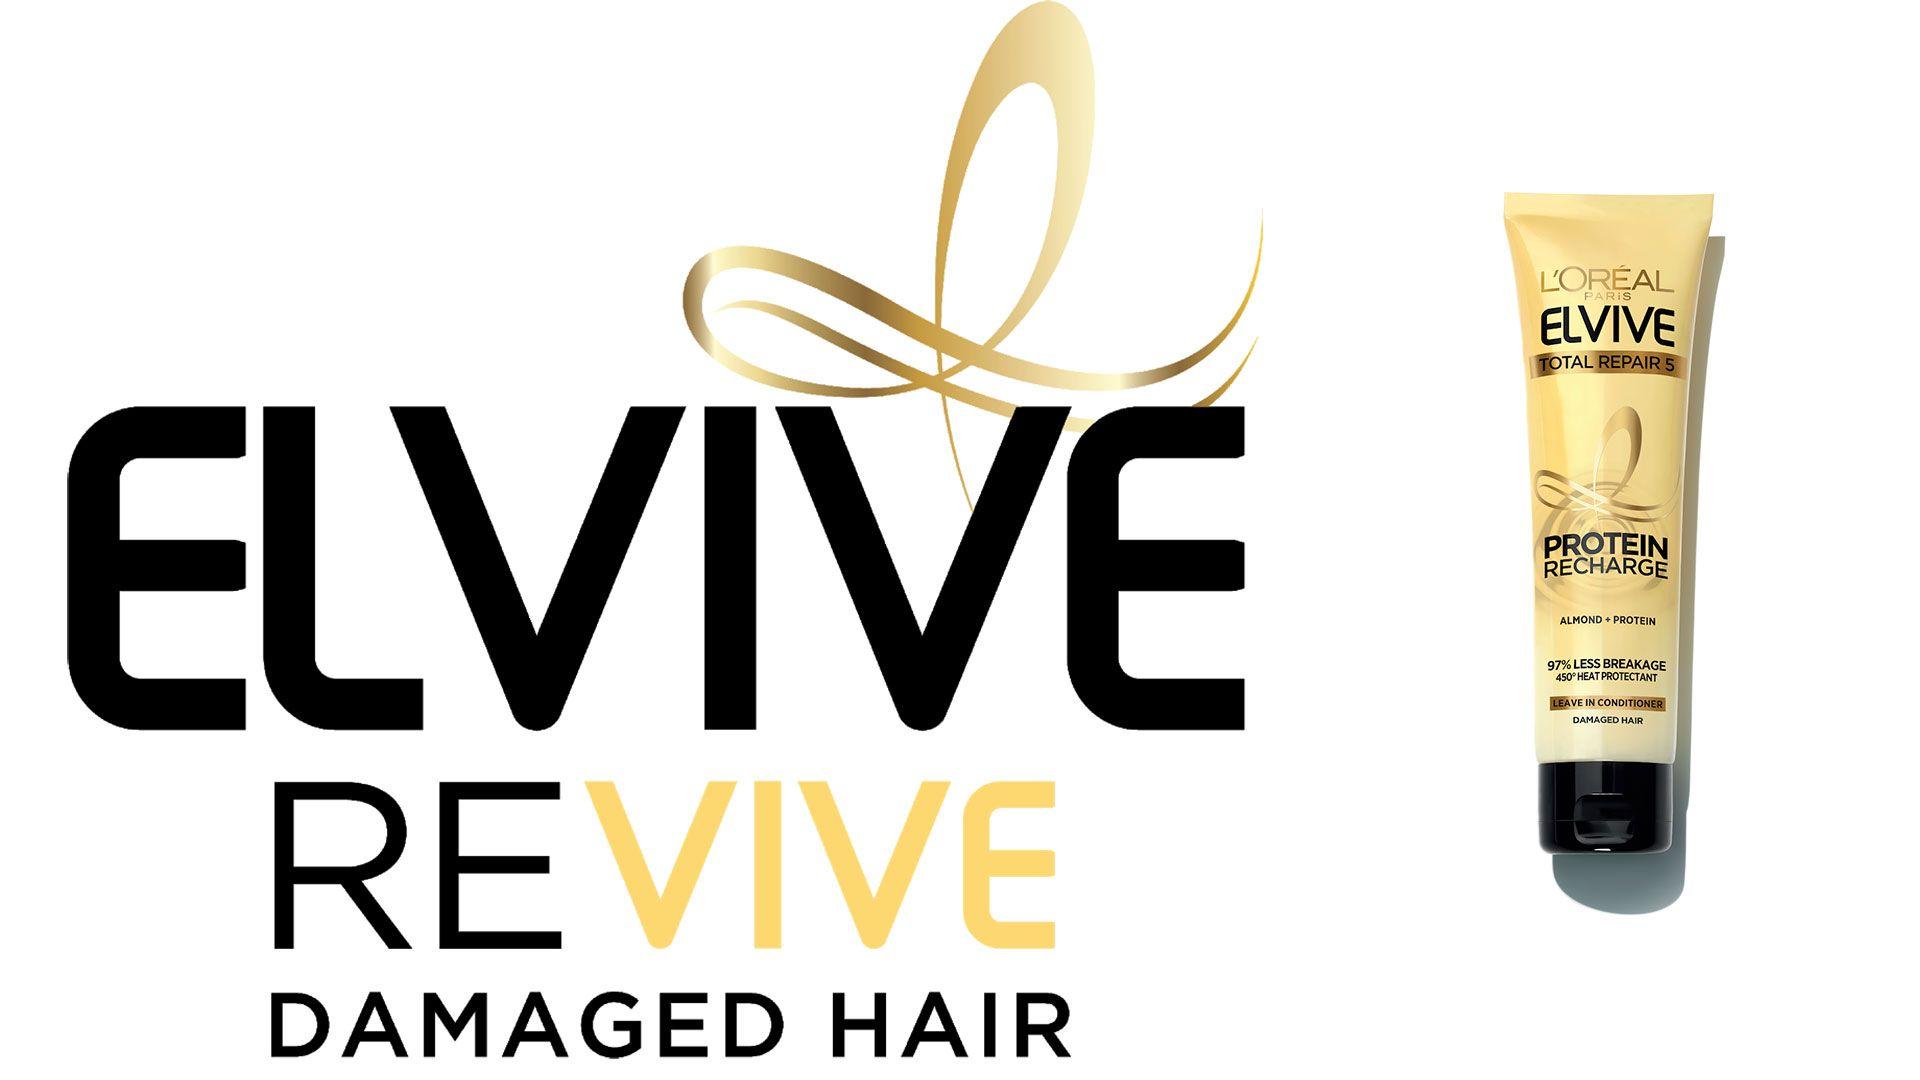 Elvive Logo - The Secret To Hair Repair